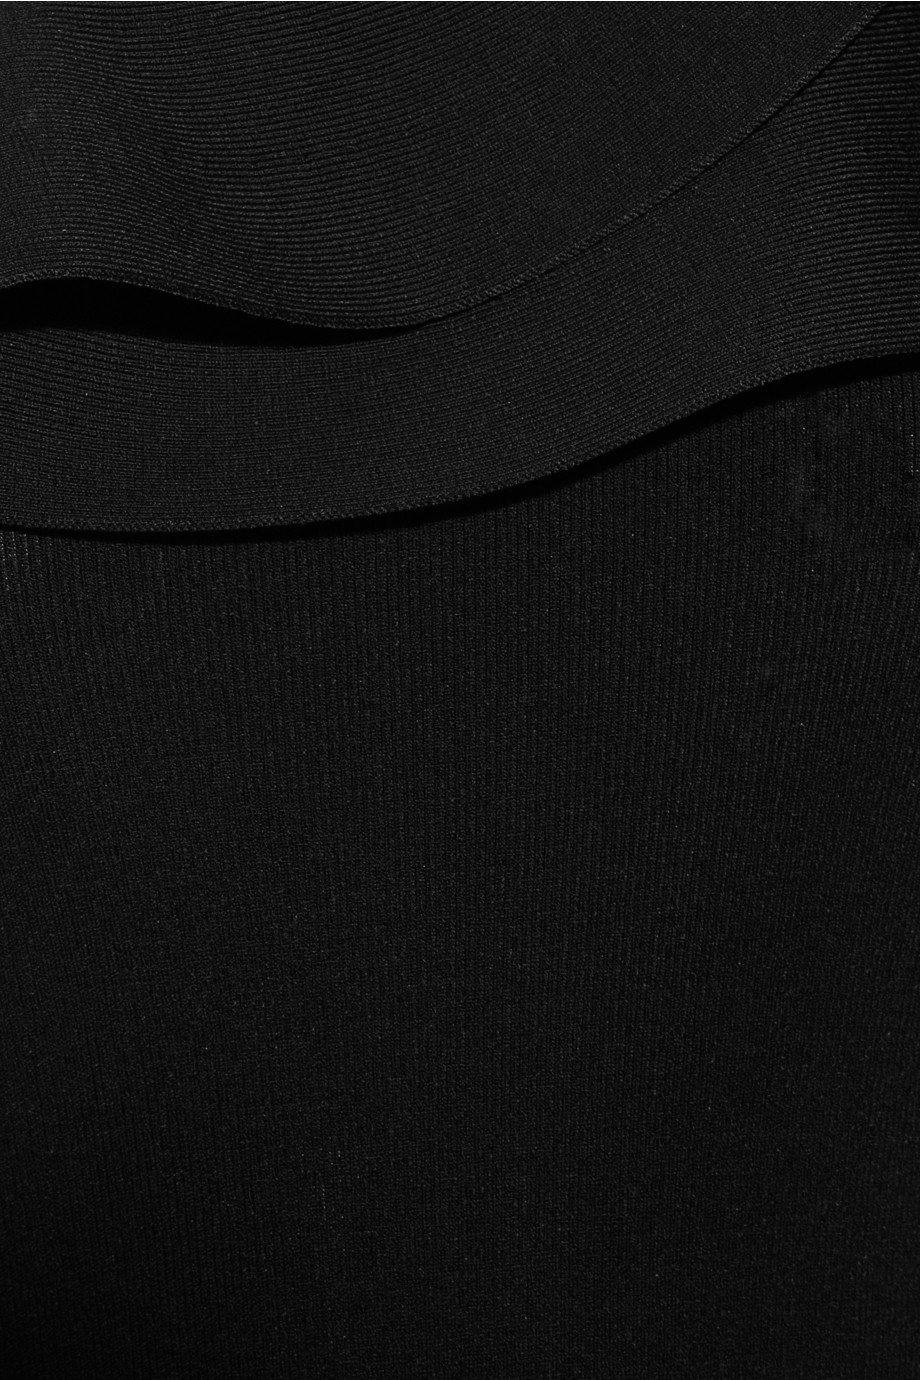 Valentino One-shoulder Ruffled Stretch-jersey Dress in Black - Lyst